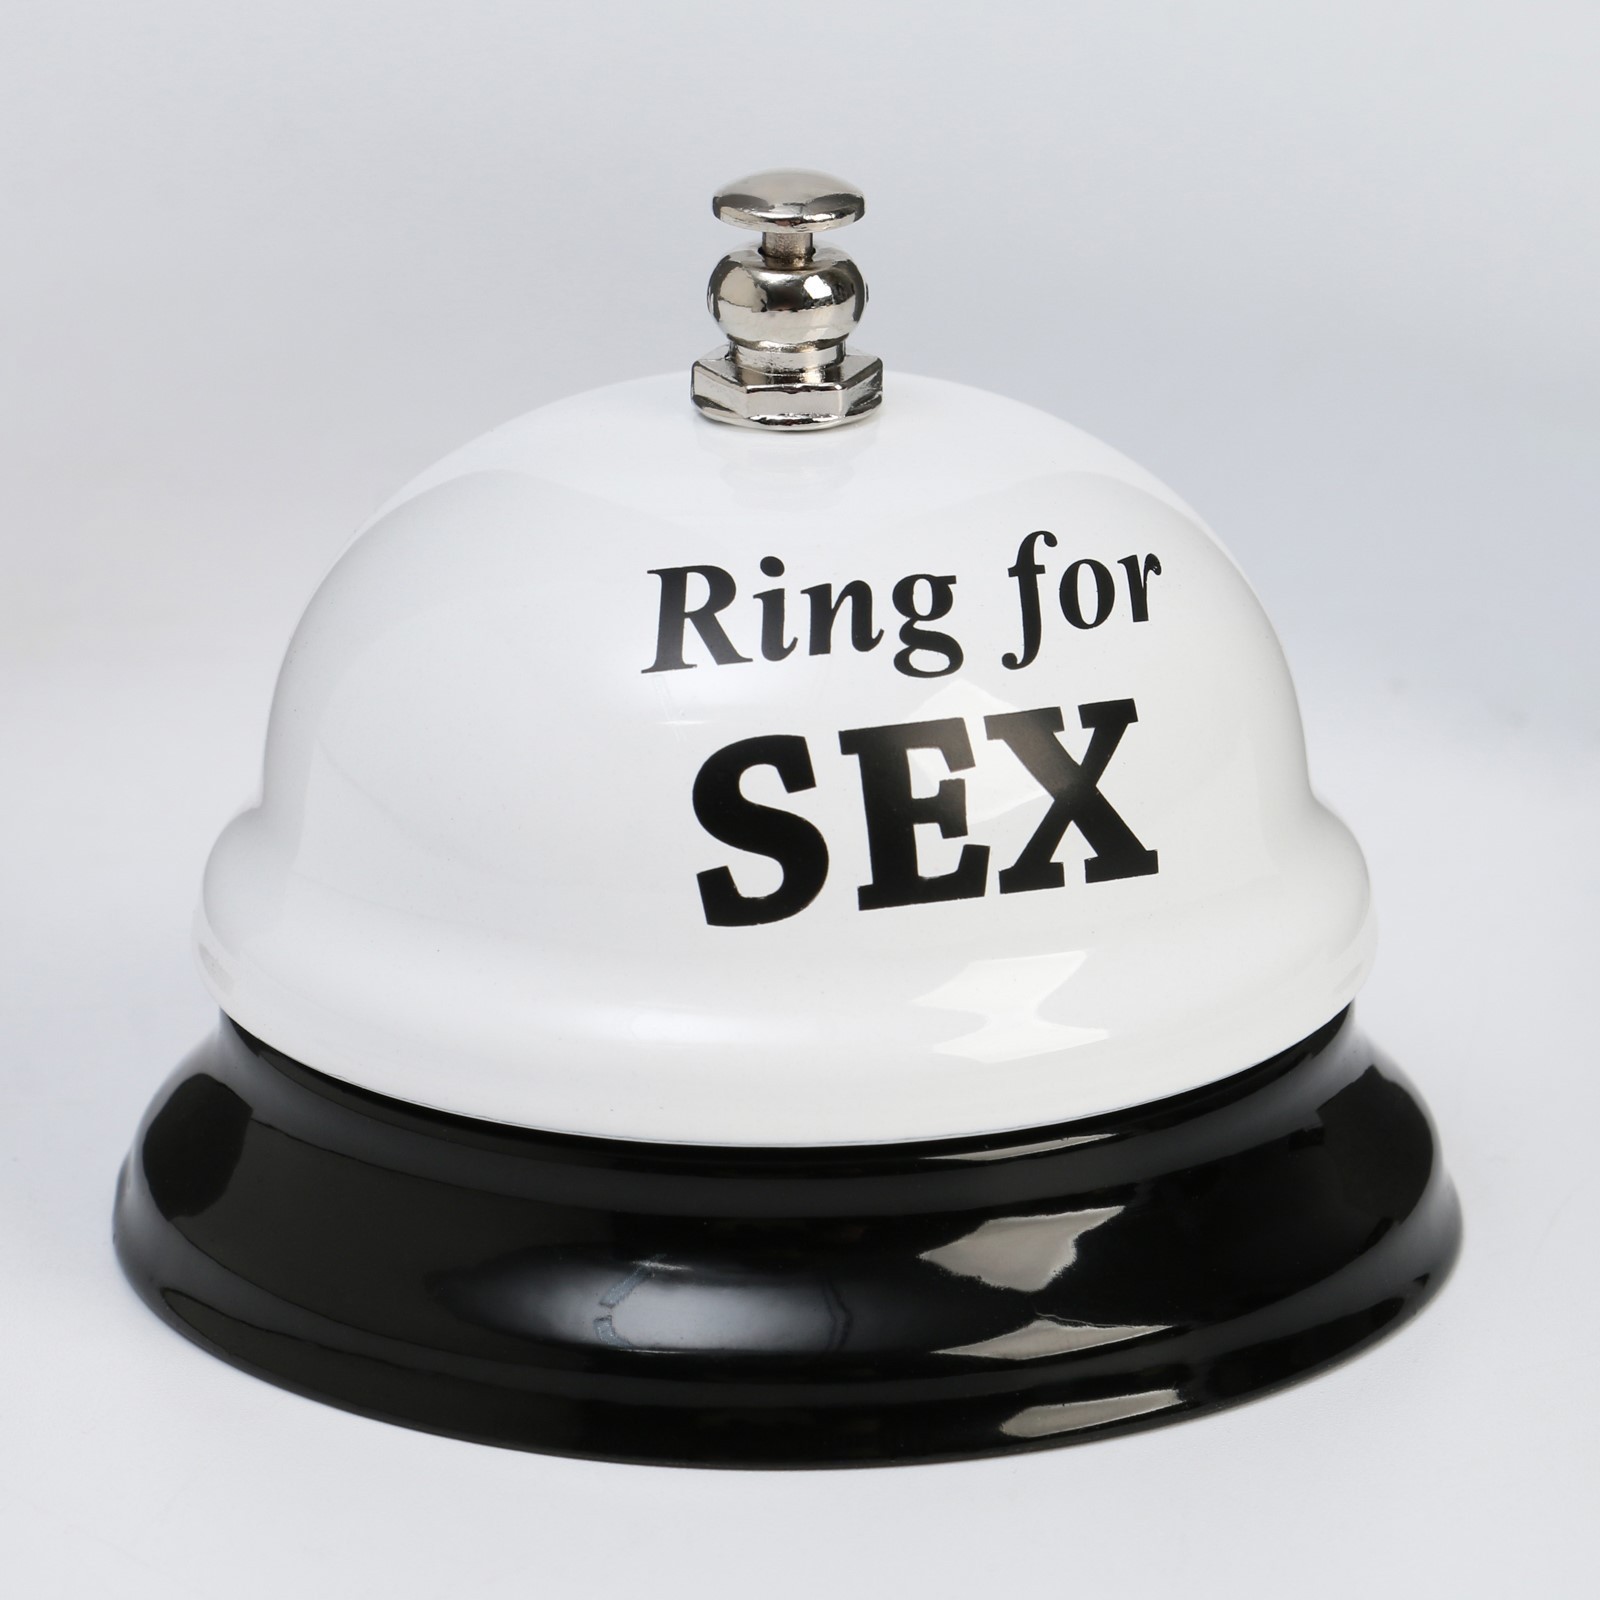 Звонок настольный RING FOR SEX, 7.5х7.5х6.5 см, цвет - белый